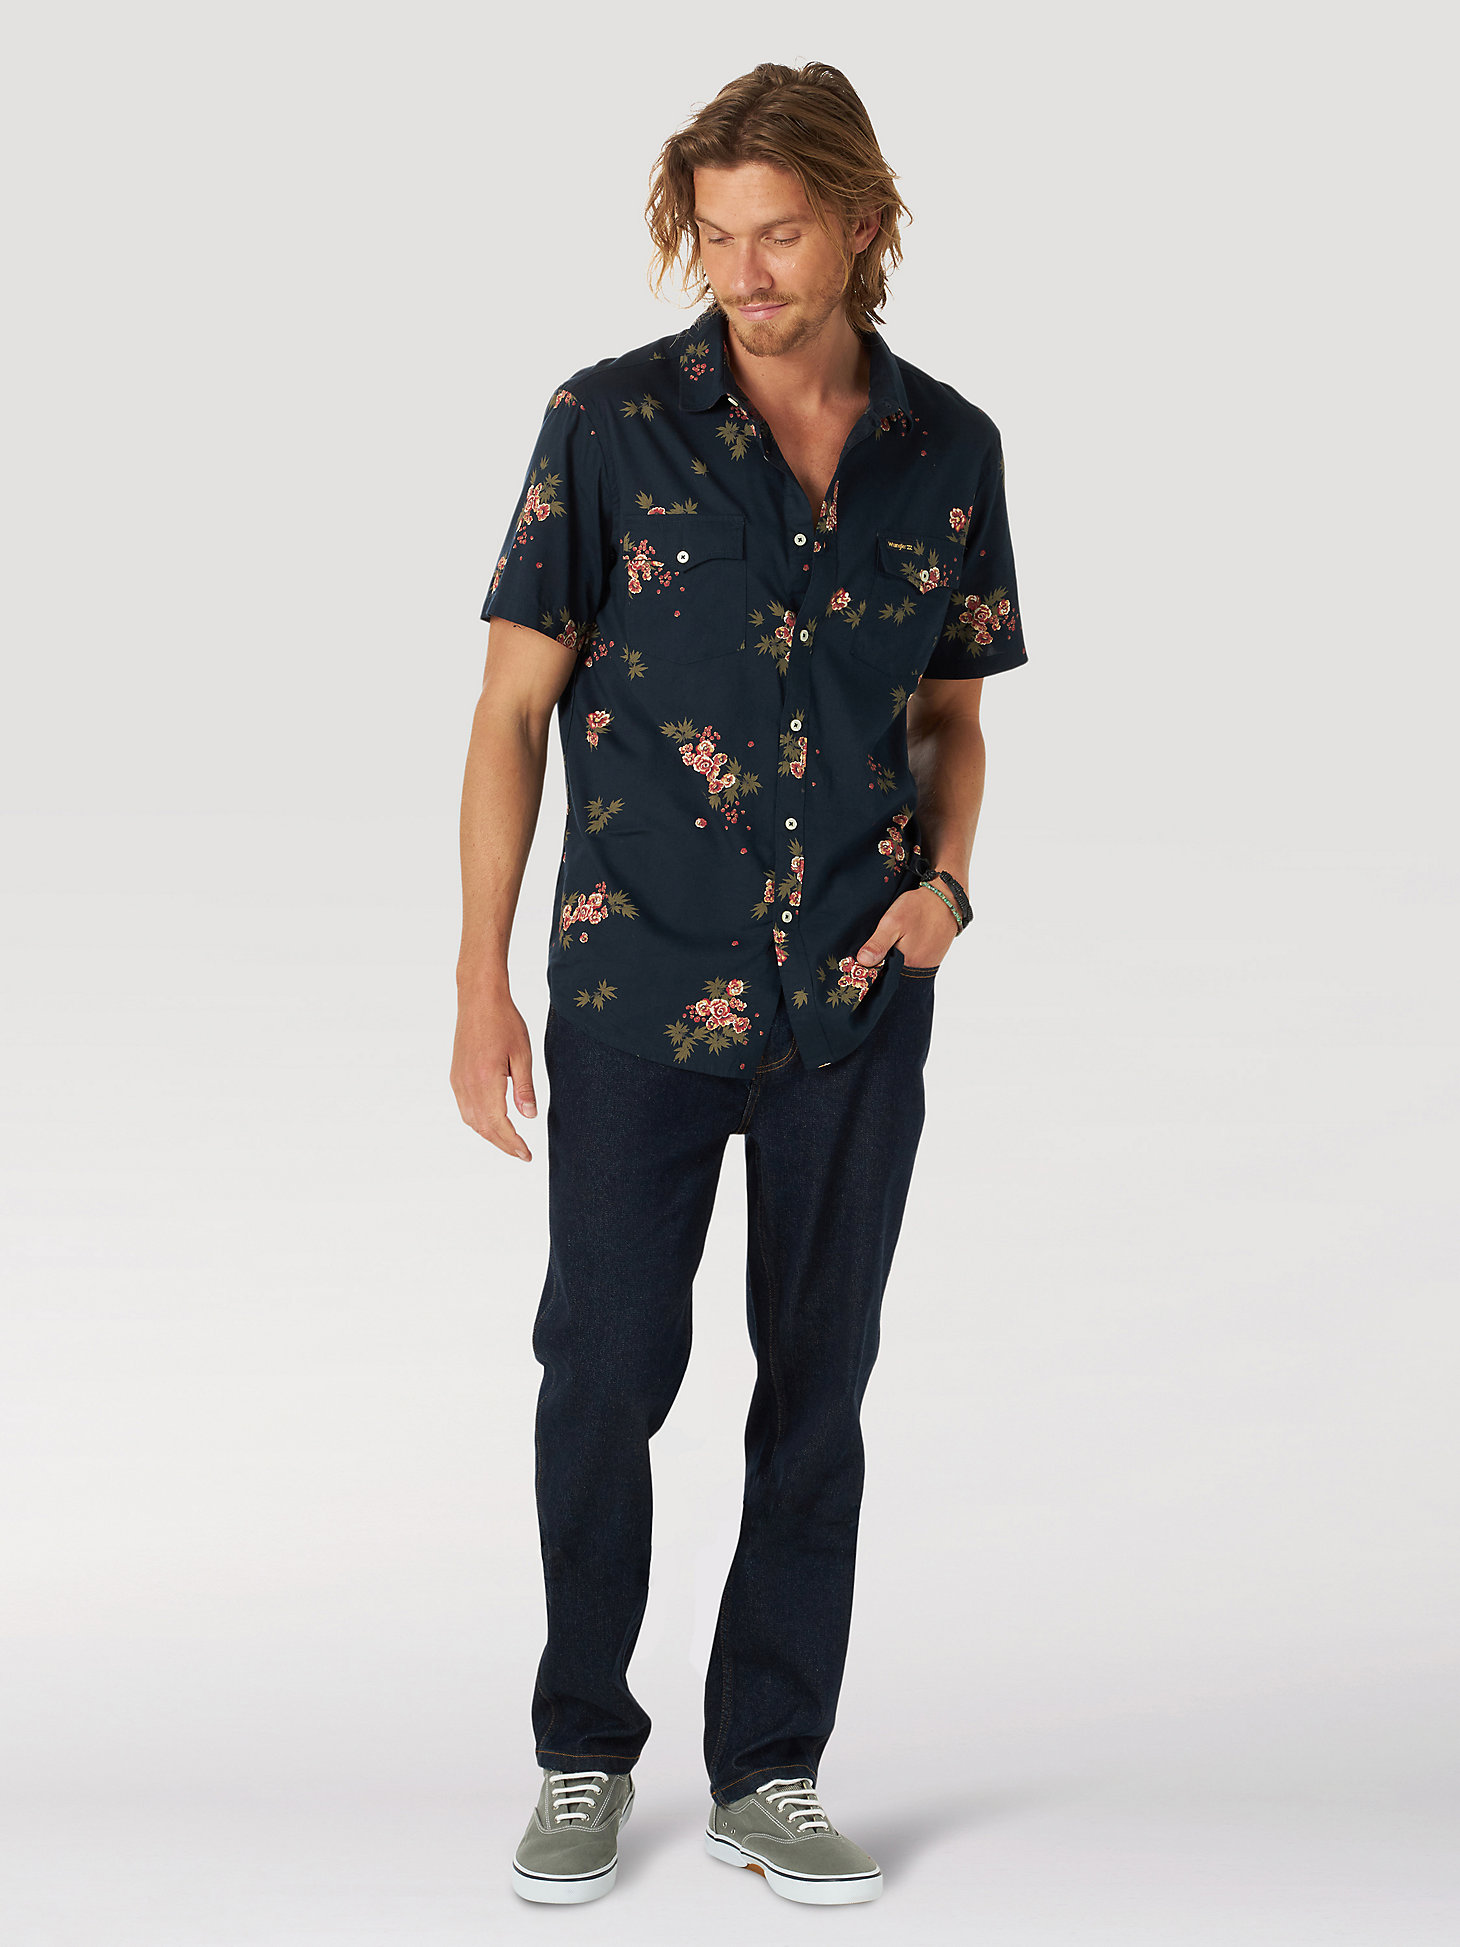 Billabong X Wrangler® Rose Garden Short Sleeve Shirt in Indigo alternative view 1